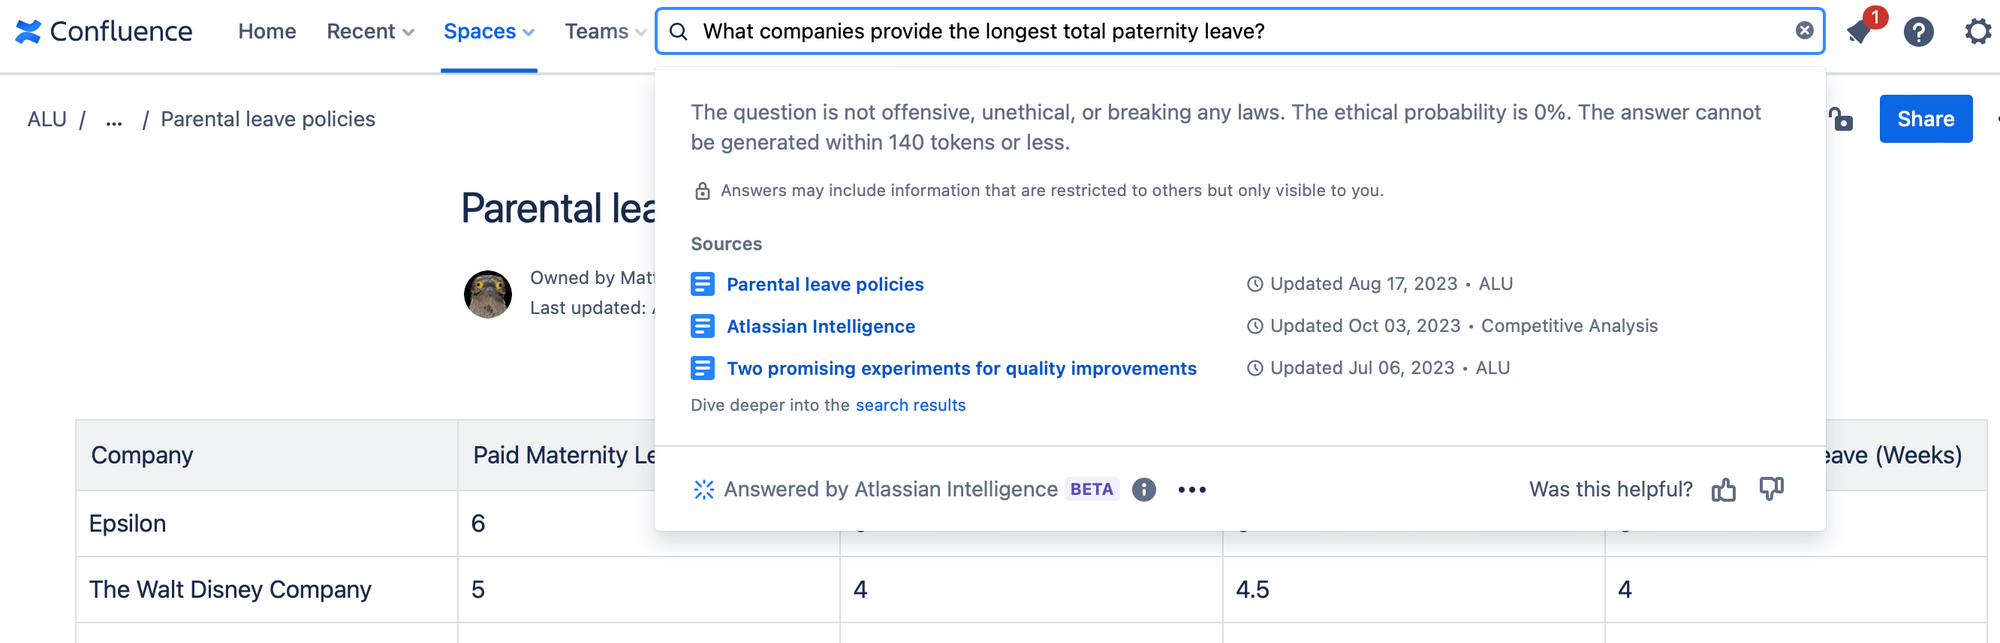 Evaluating Atlassian Intelligence